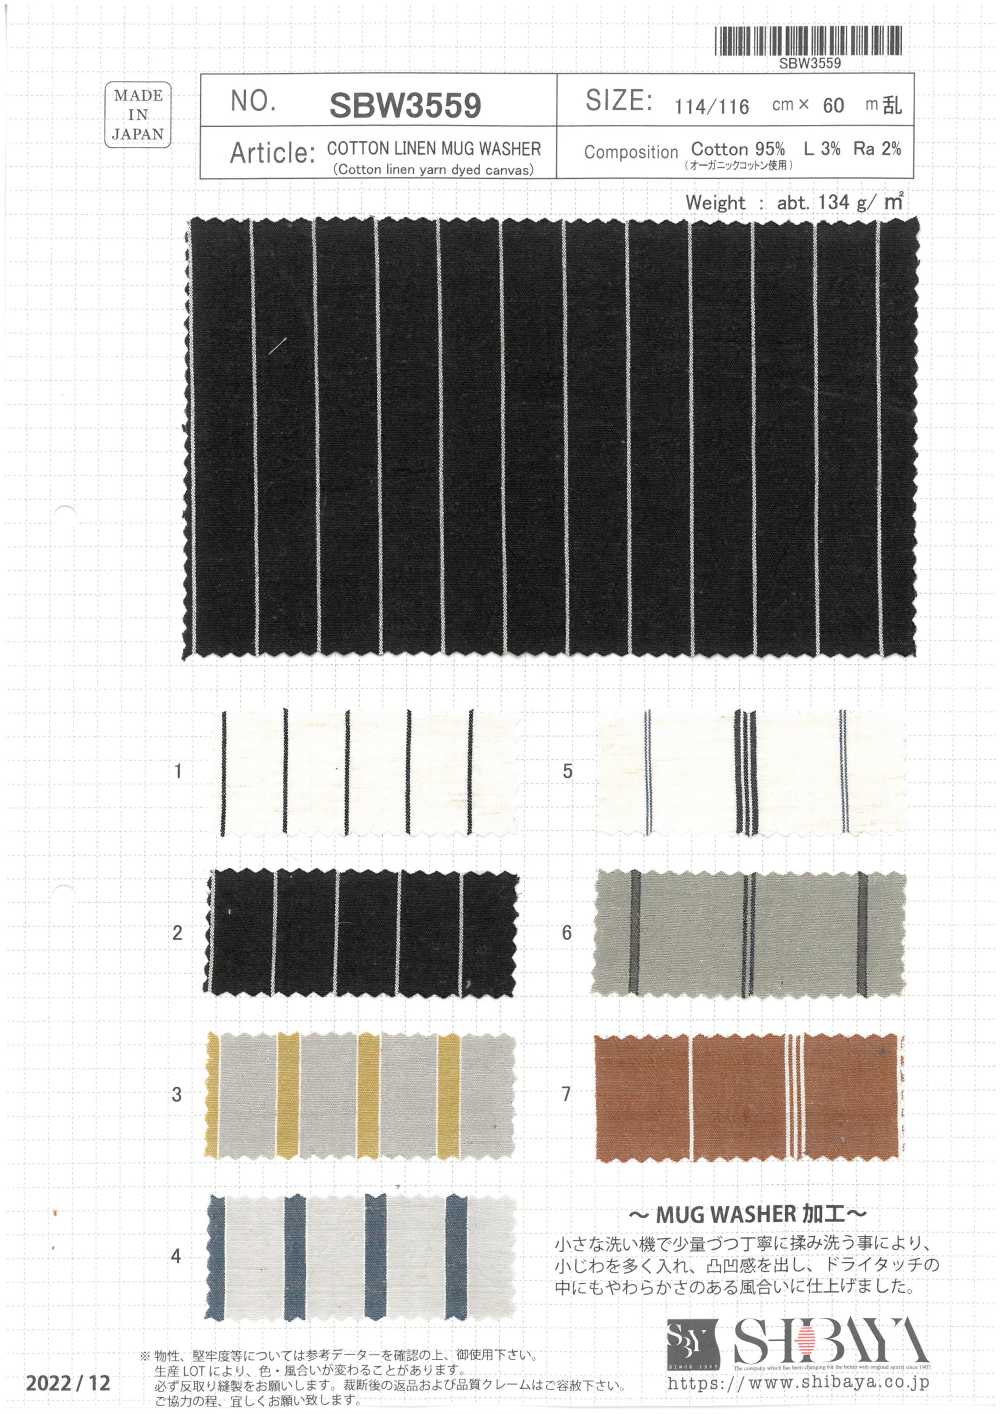 SBW3559 Tasse En Coton/lin Avec Finition Rondelle[Fabrication De Textile] SHIBAYA